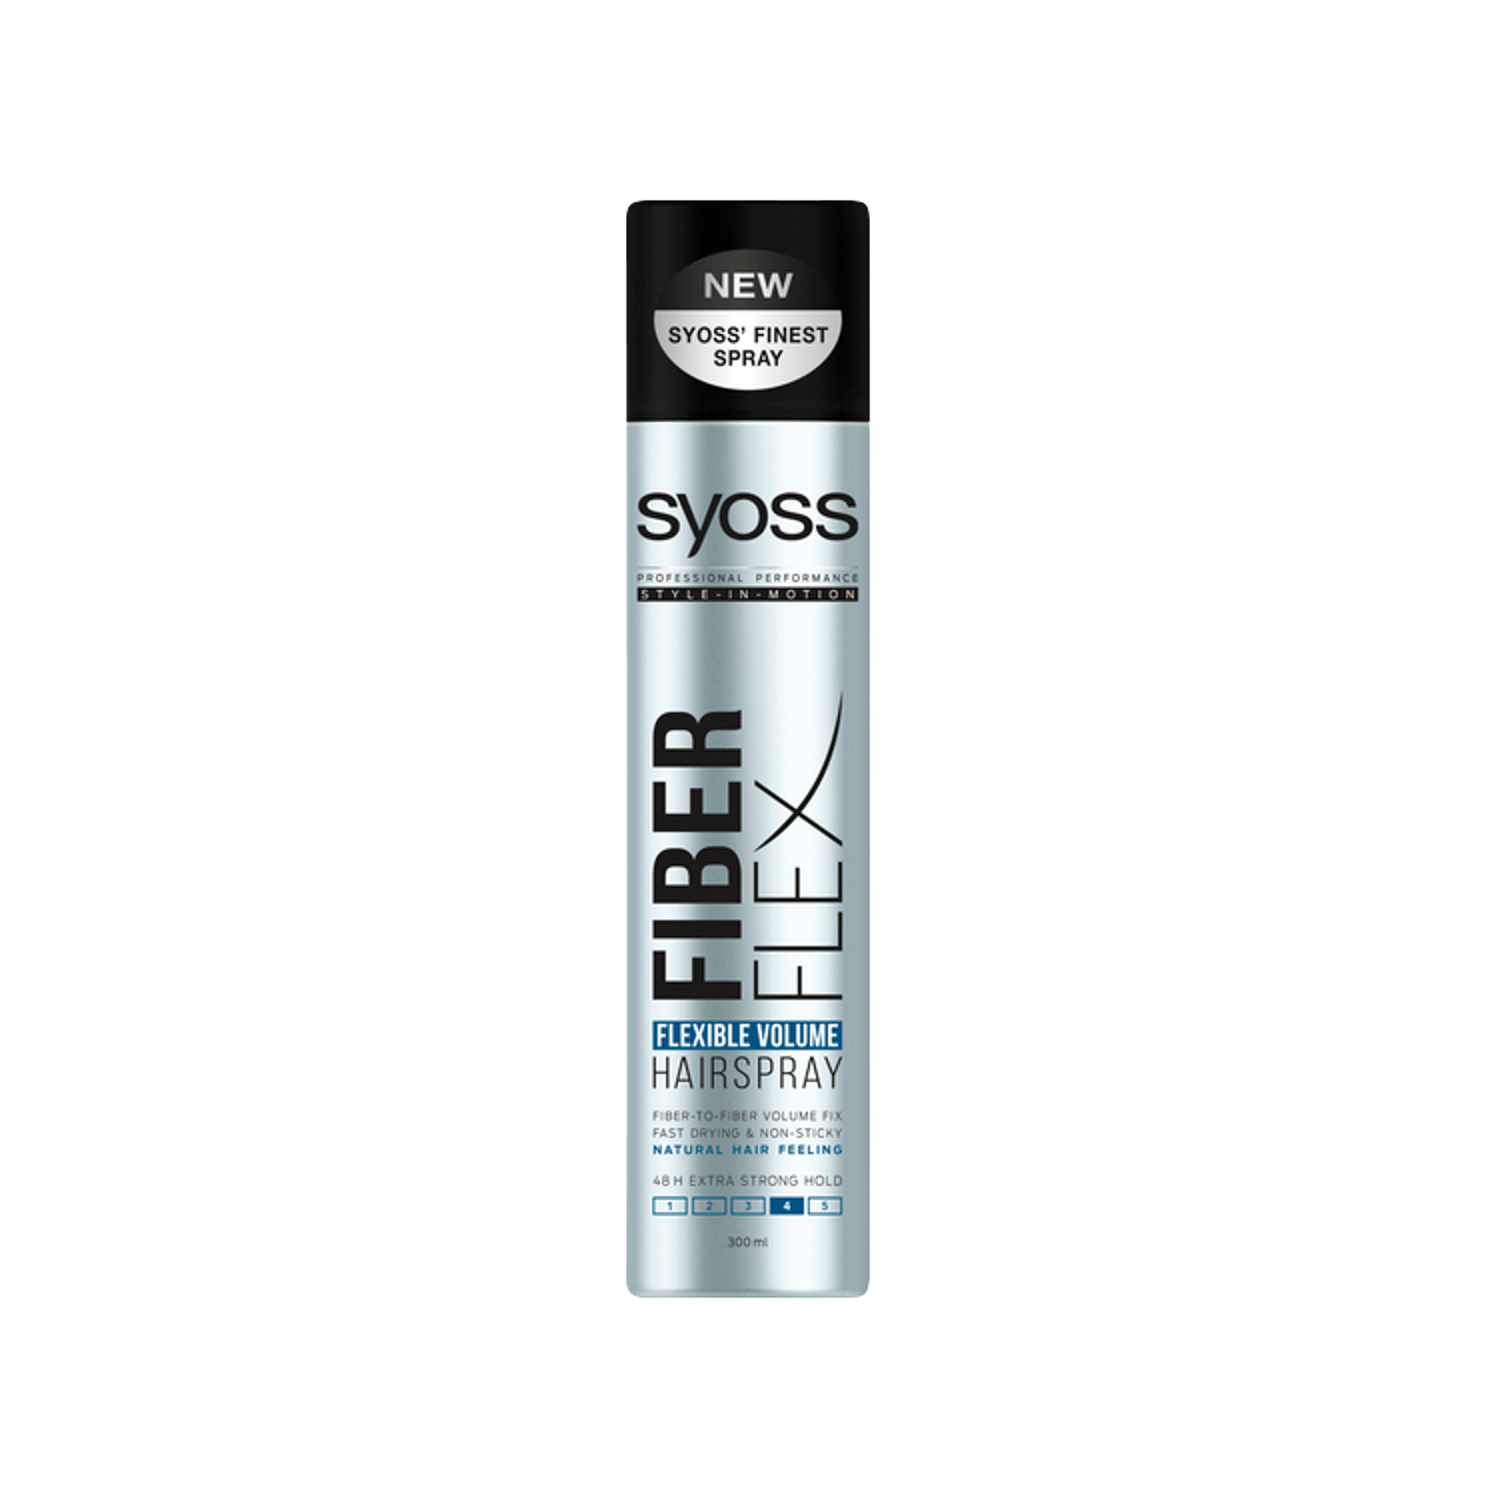 Лак для волос экстрасильного объема Syoss Fiberflex, 300 мл цена и фото